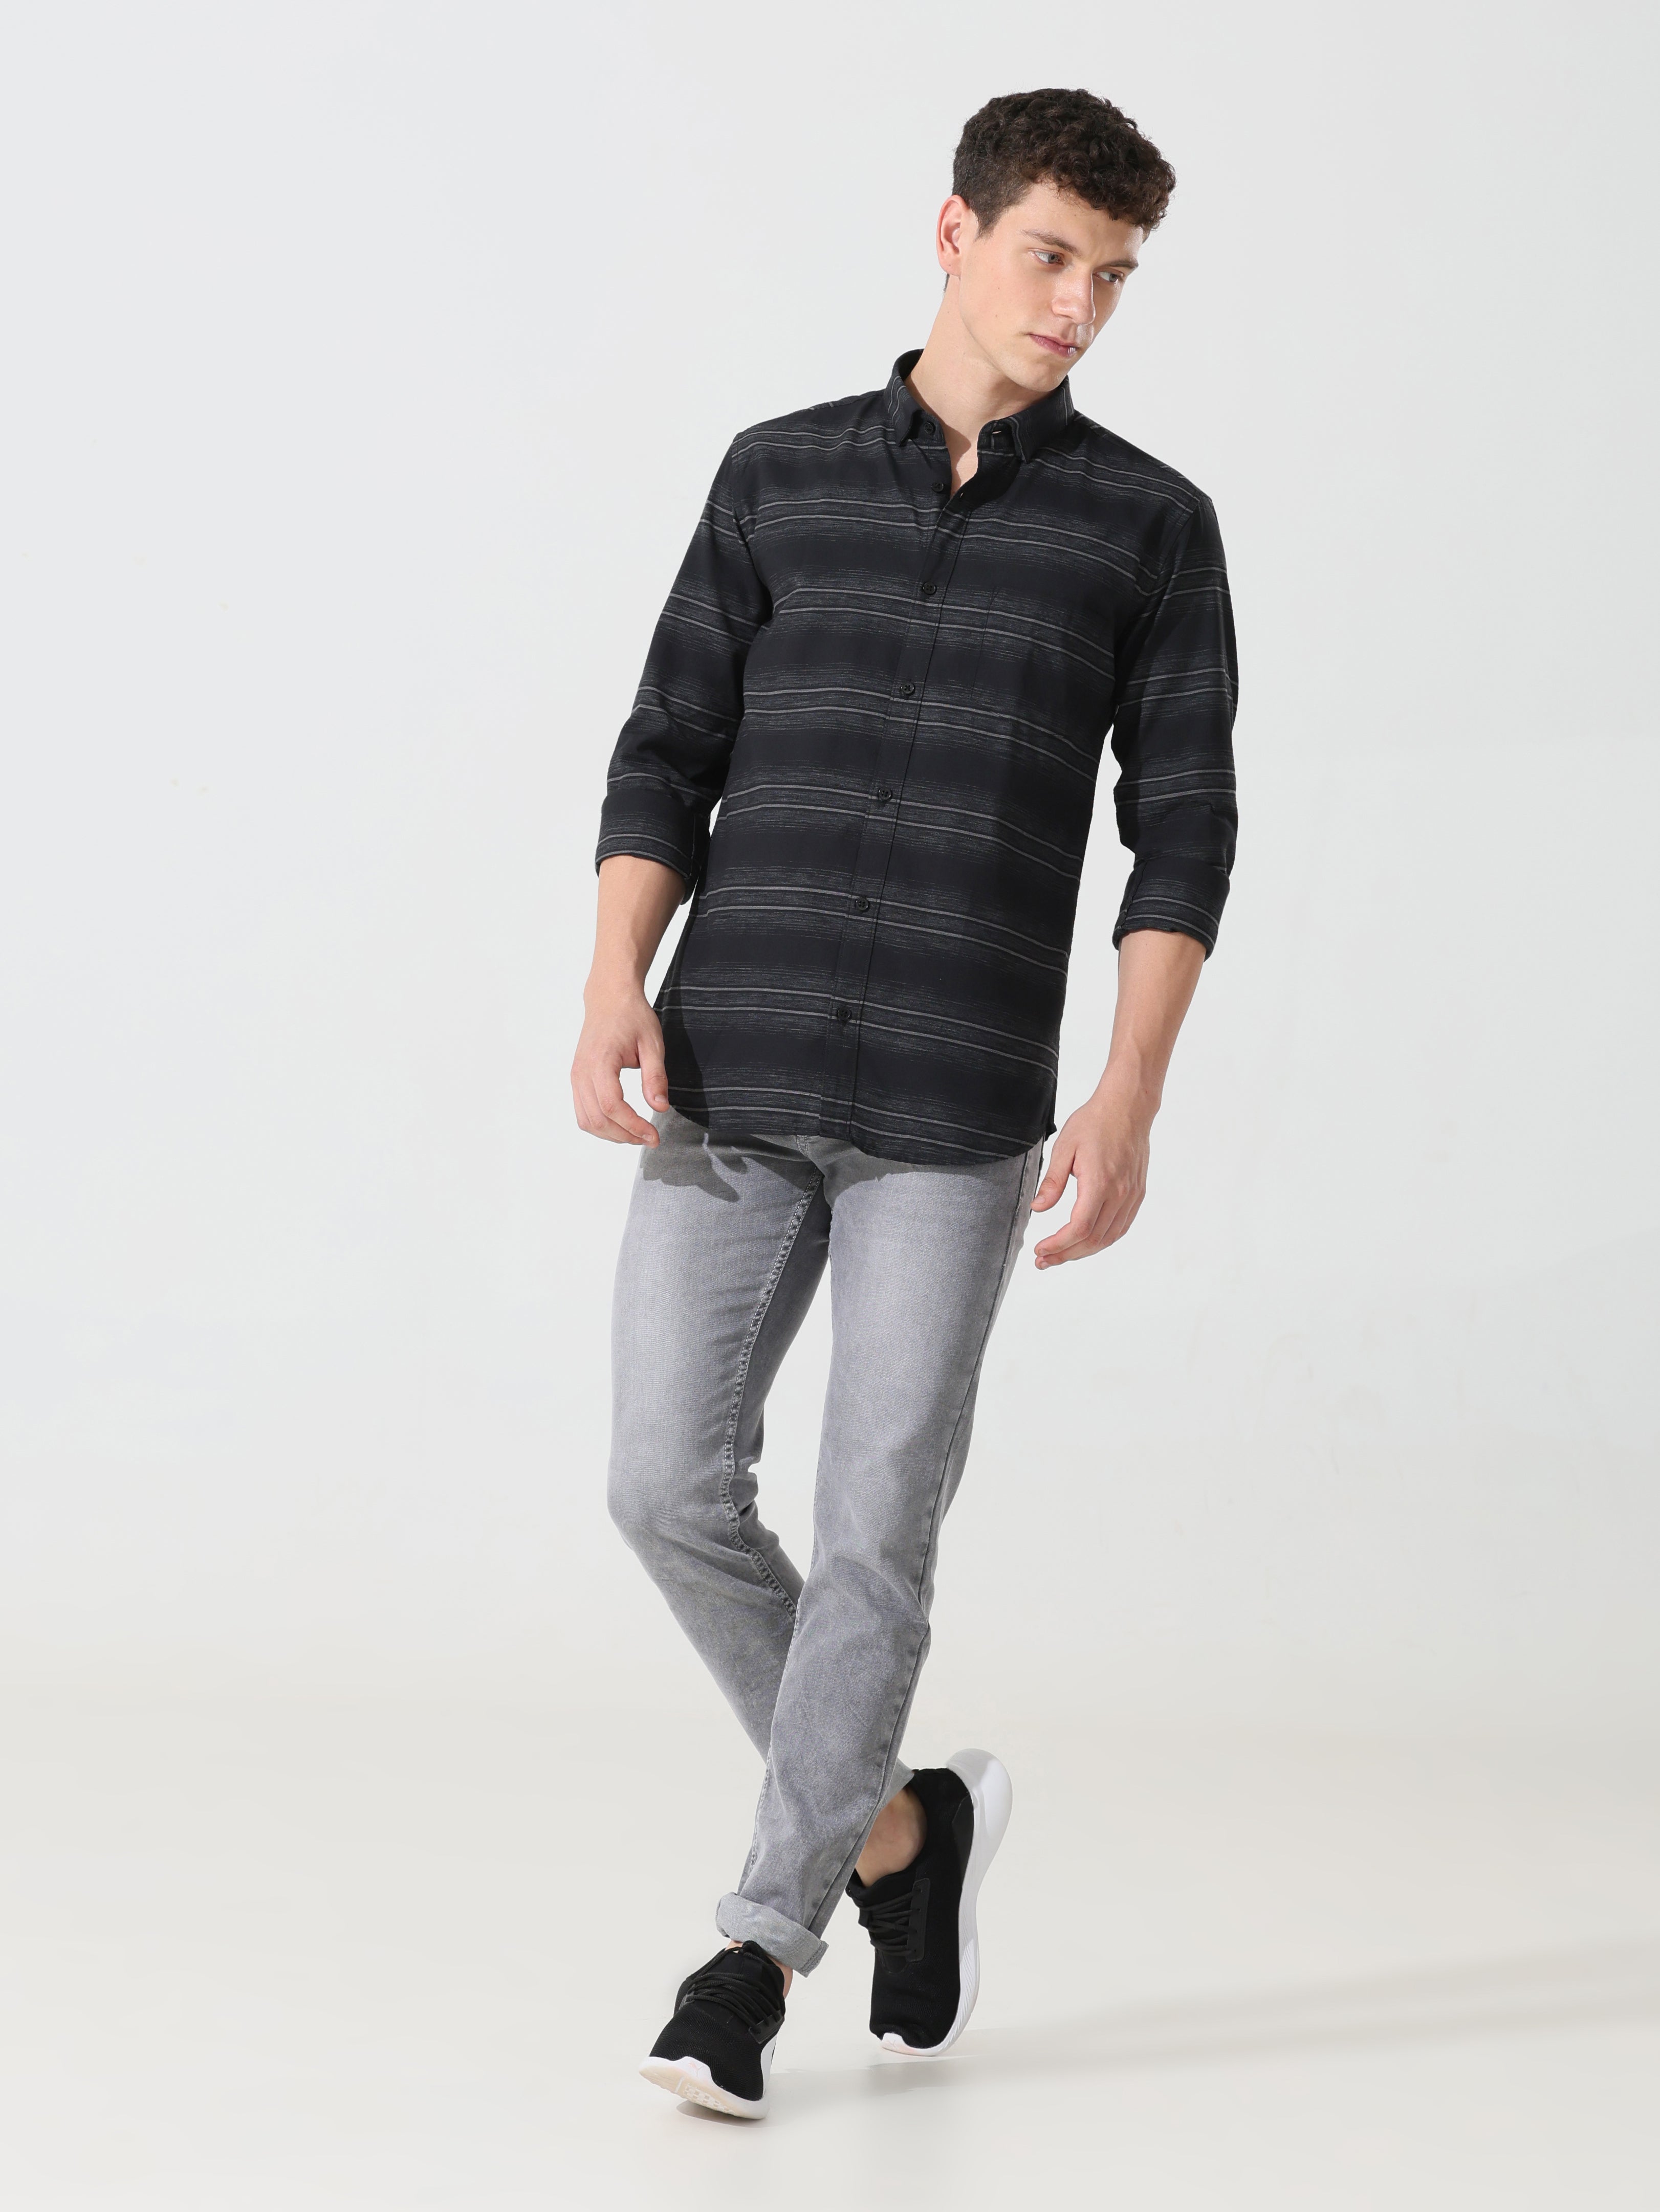 Black stripe slim fit shirts - Address pro